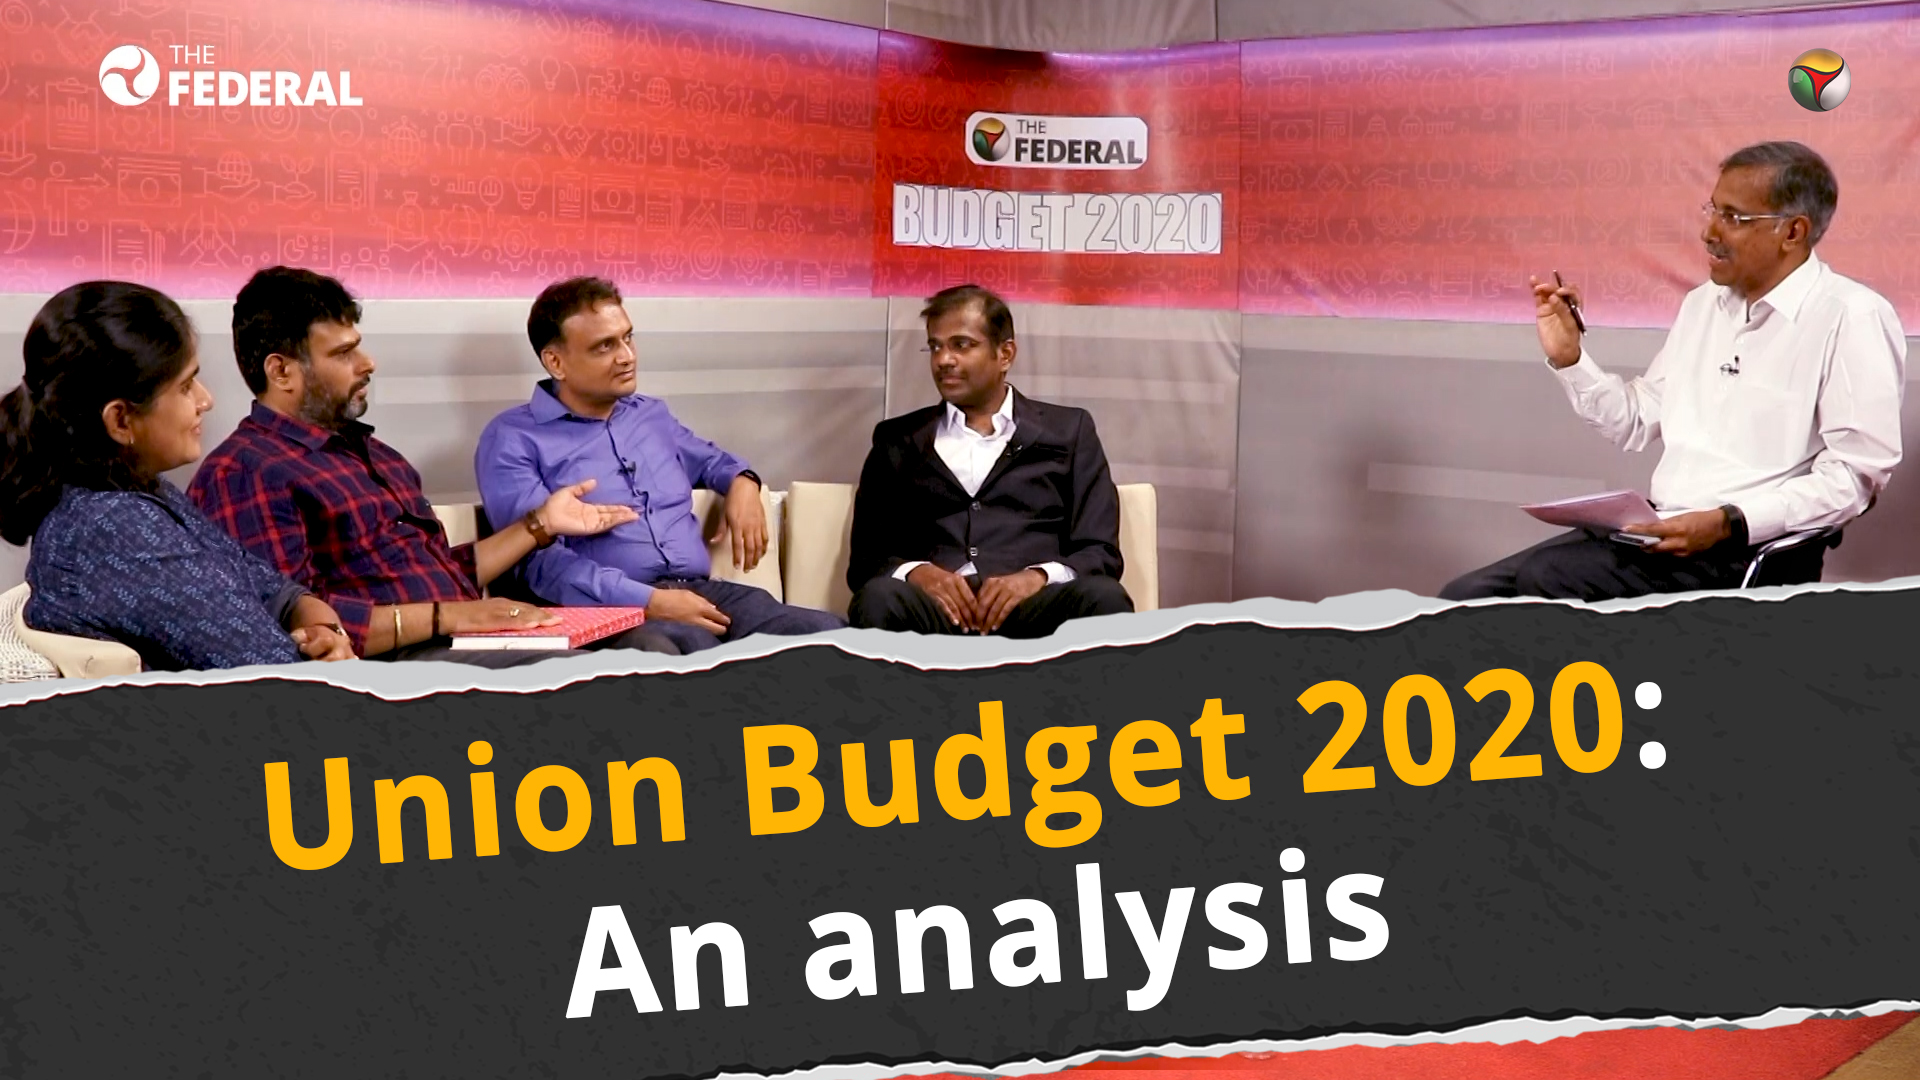 Union Budget 2020: An analysis